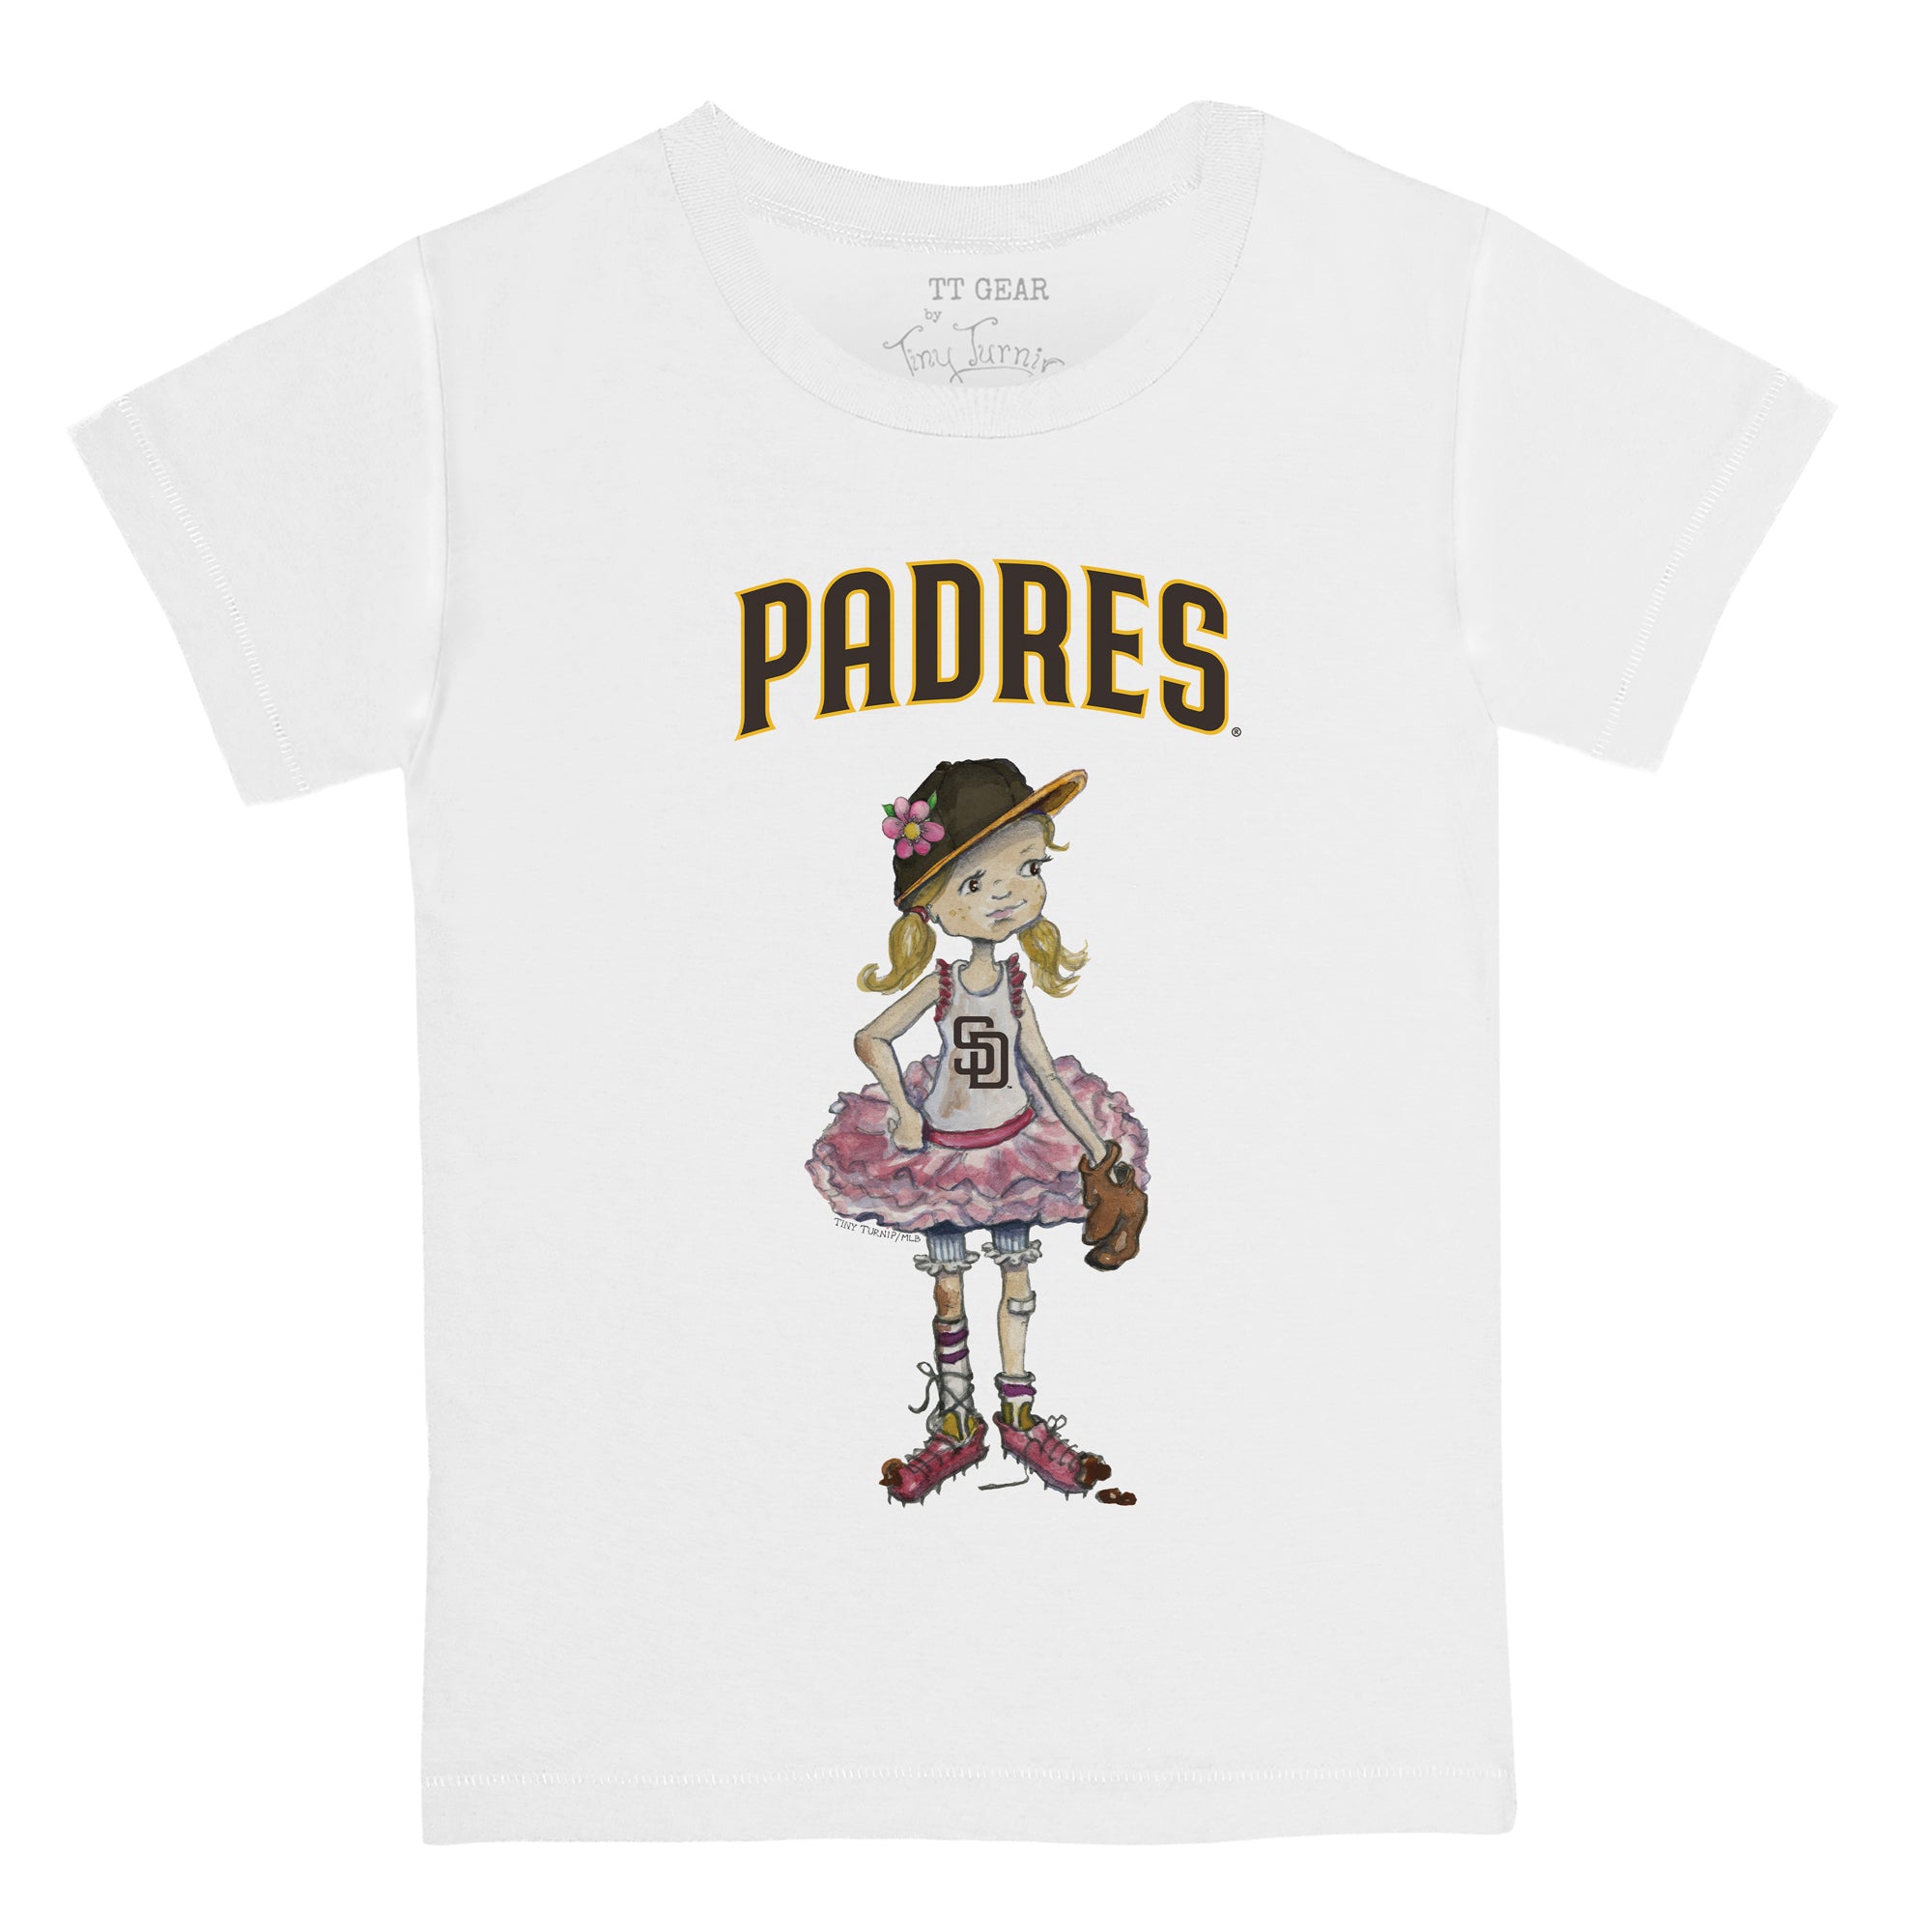 Lids Texas Rangers Tiny Turnip Infant Baseball Crossbats T-Shirt